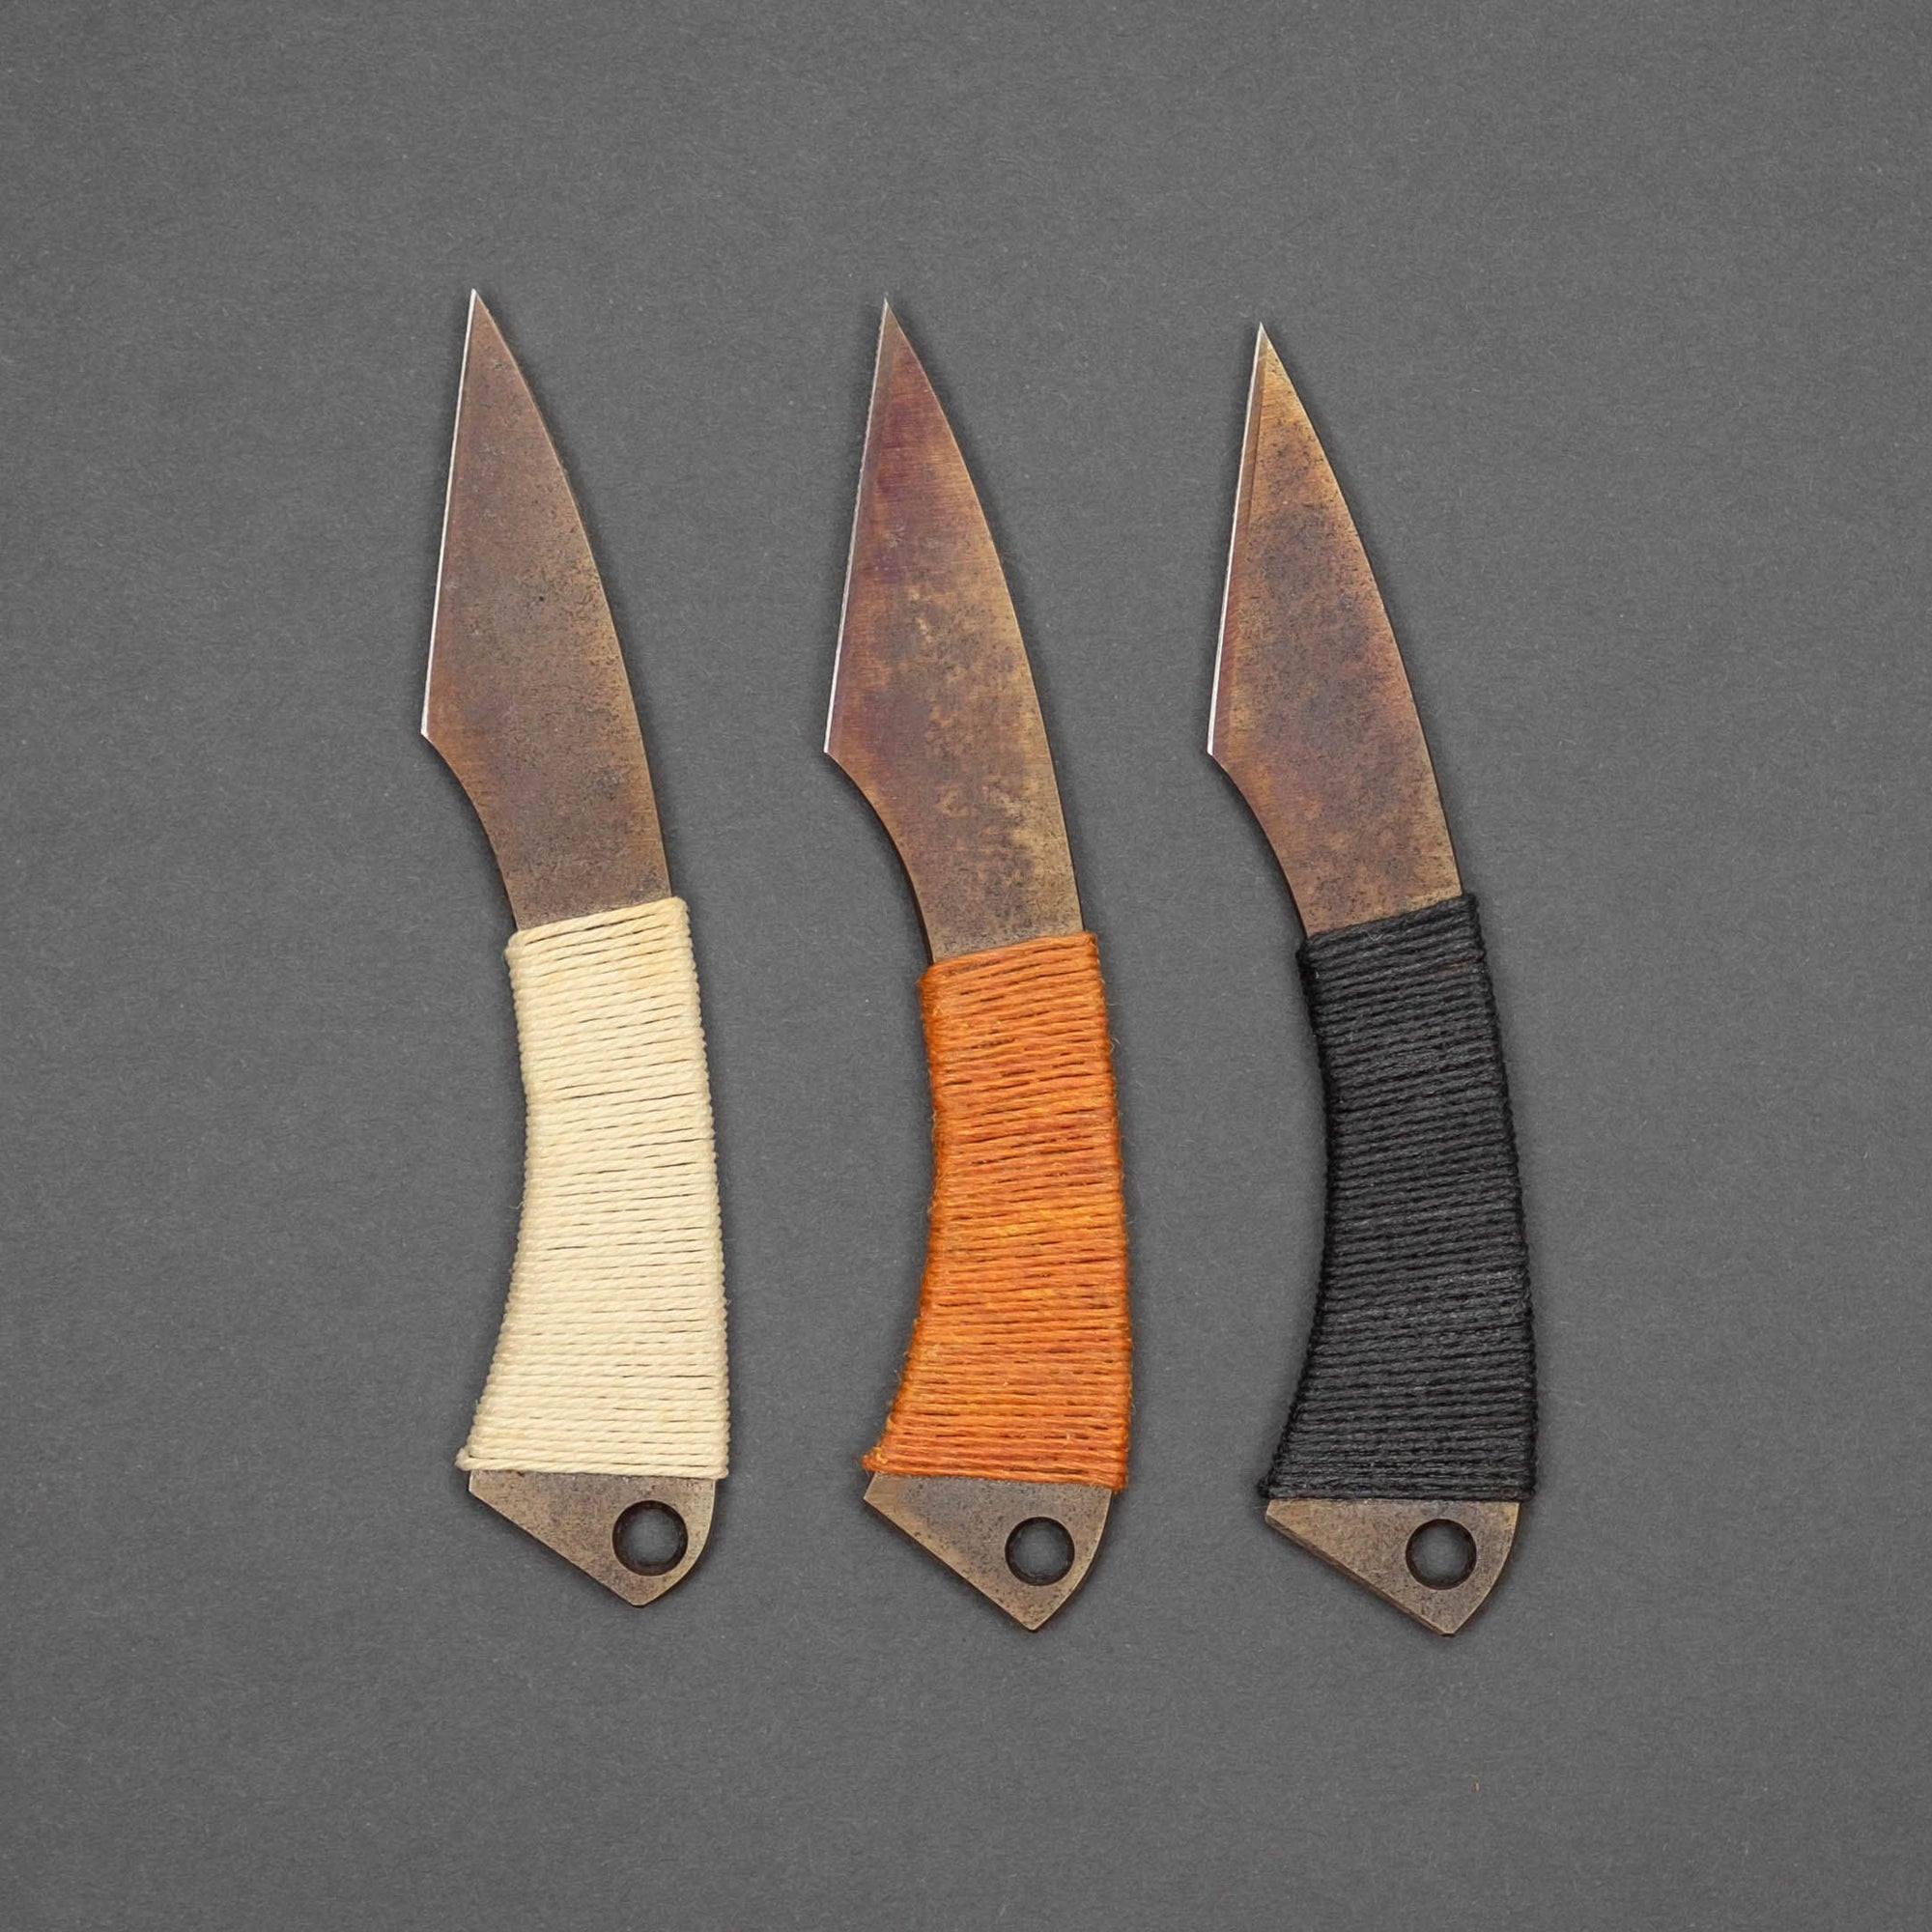 Best Kiridashi Knife For Sale USA & Canada